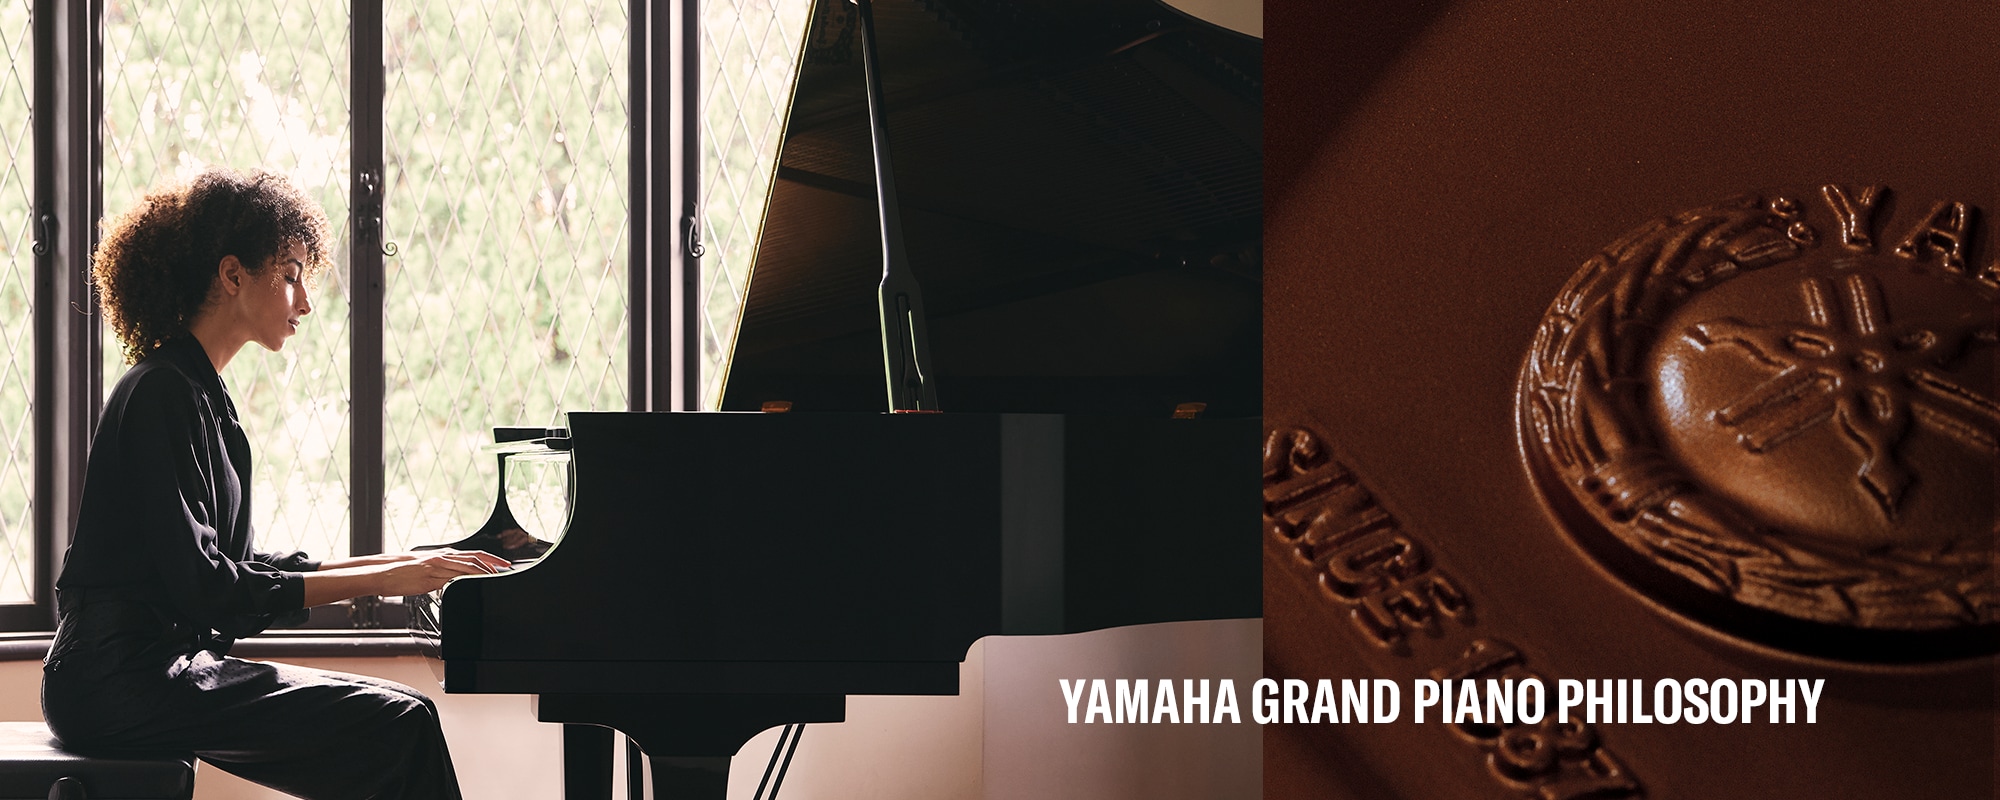 Visual utama Filosofi Grand Piano Yamaha